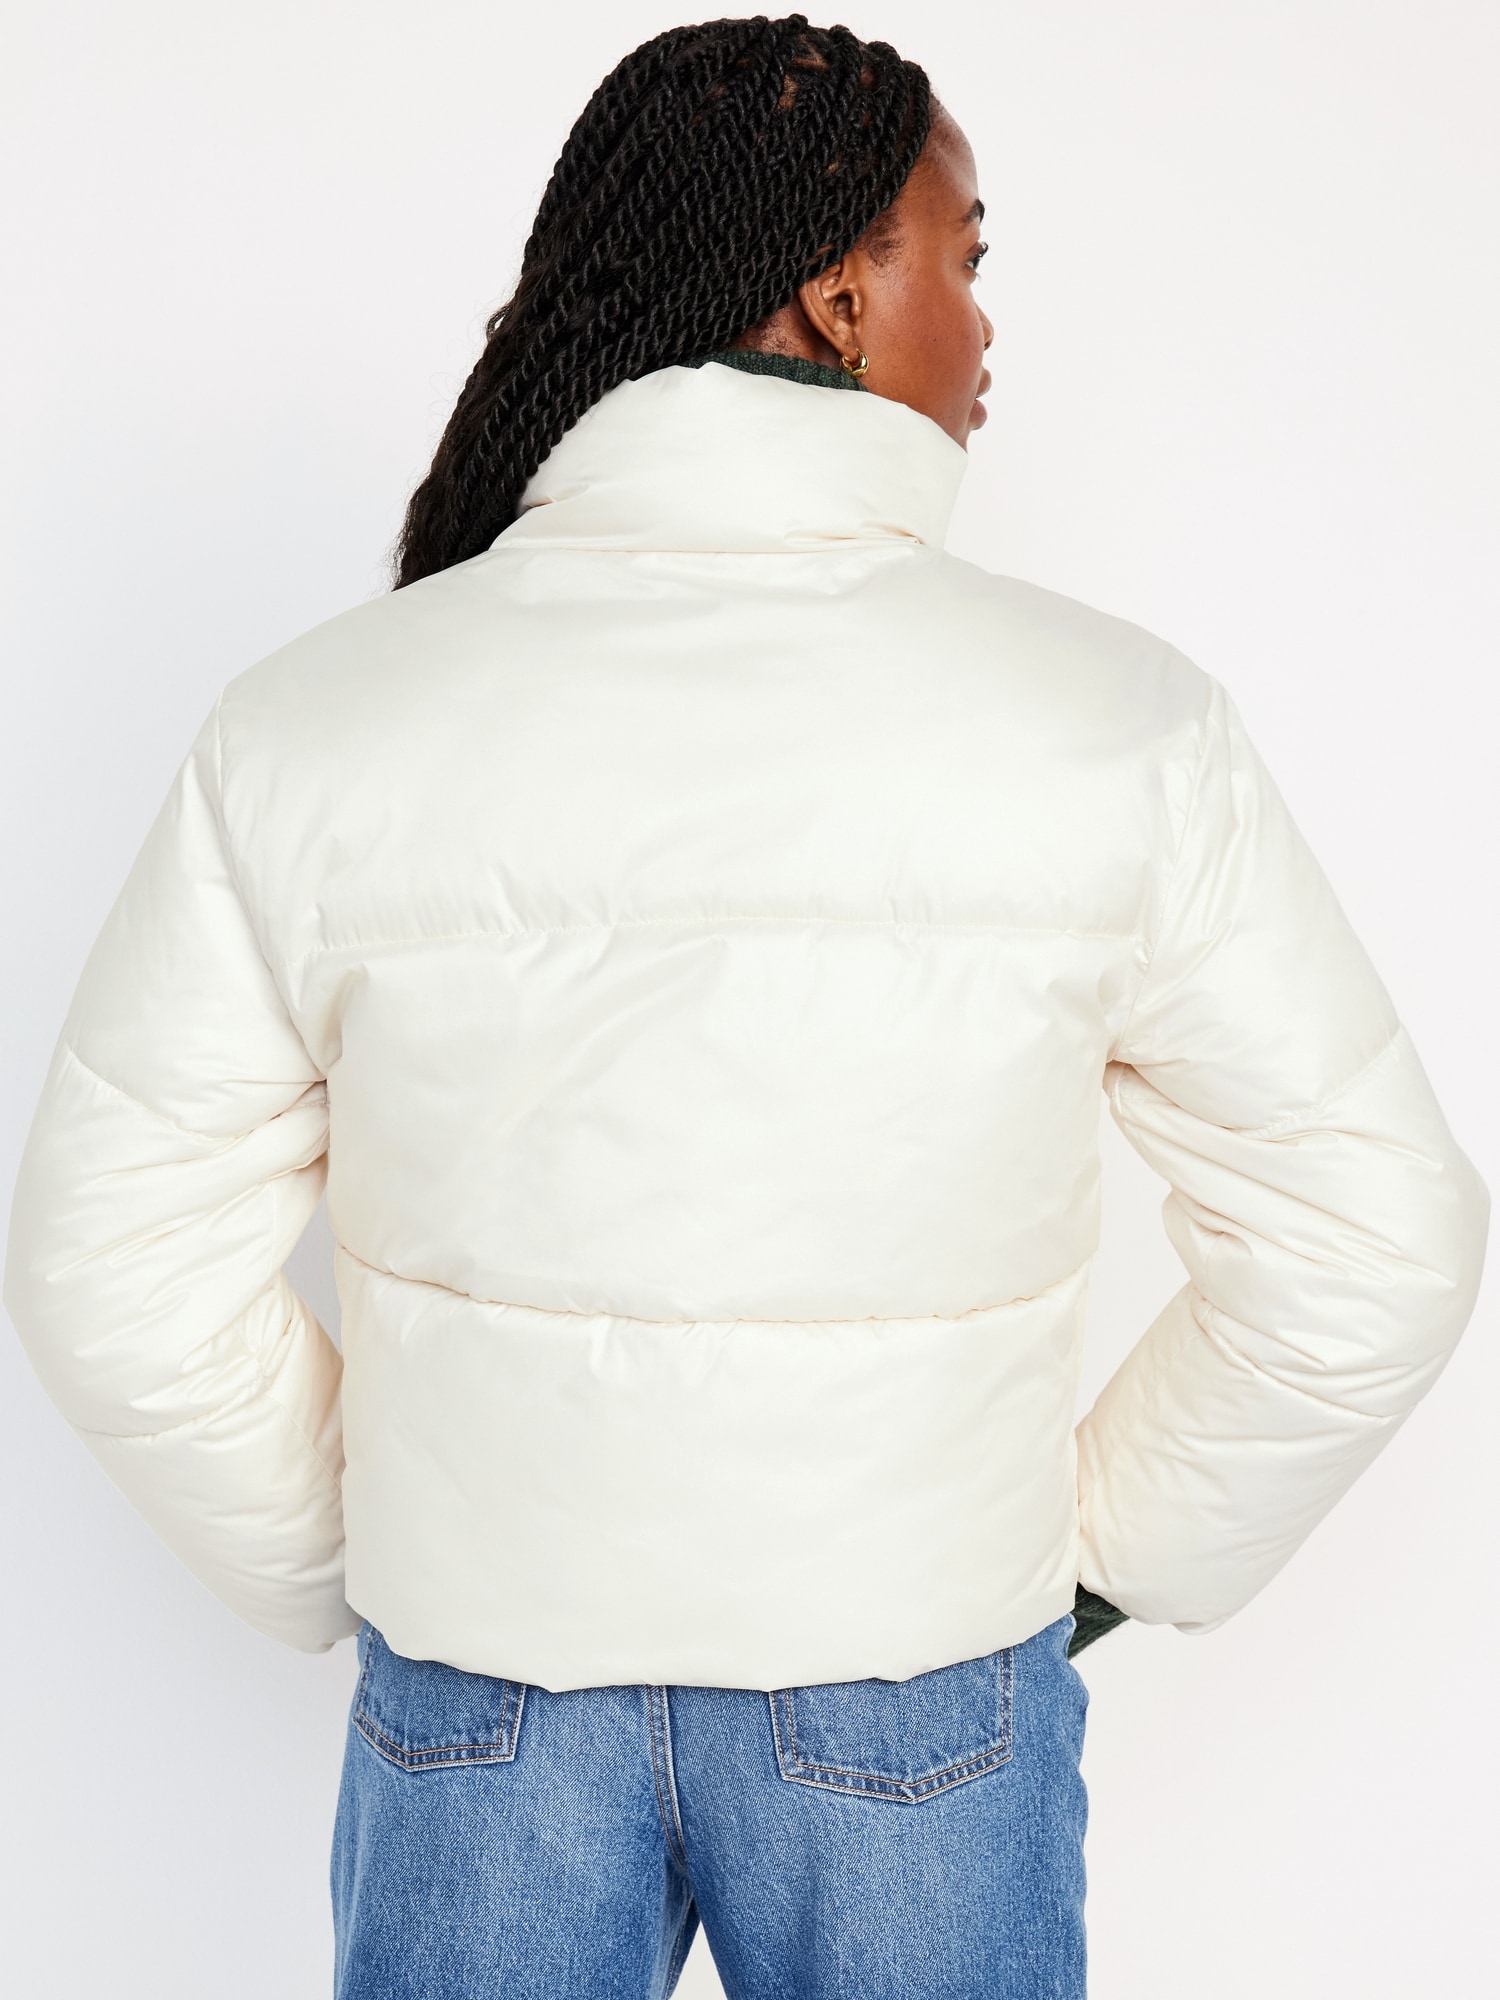 Chicos Travelers Womens Jacket Size 12 14 Large - Depop